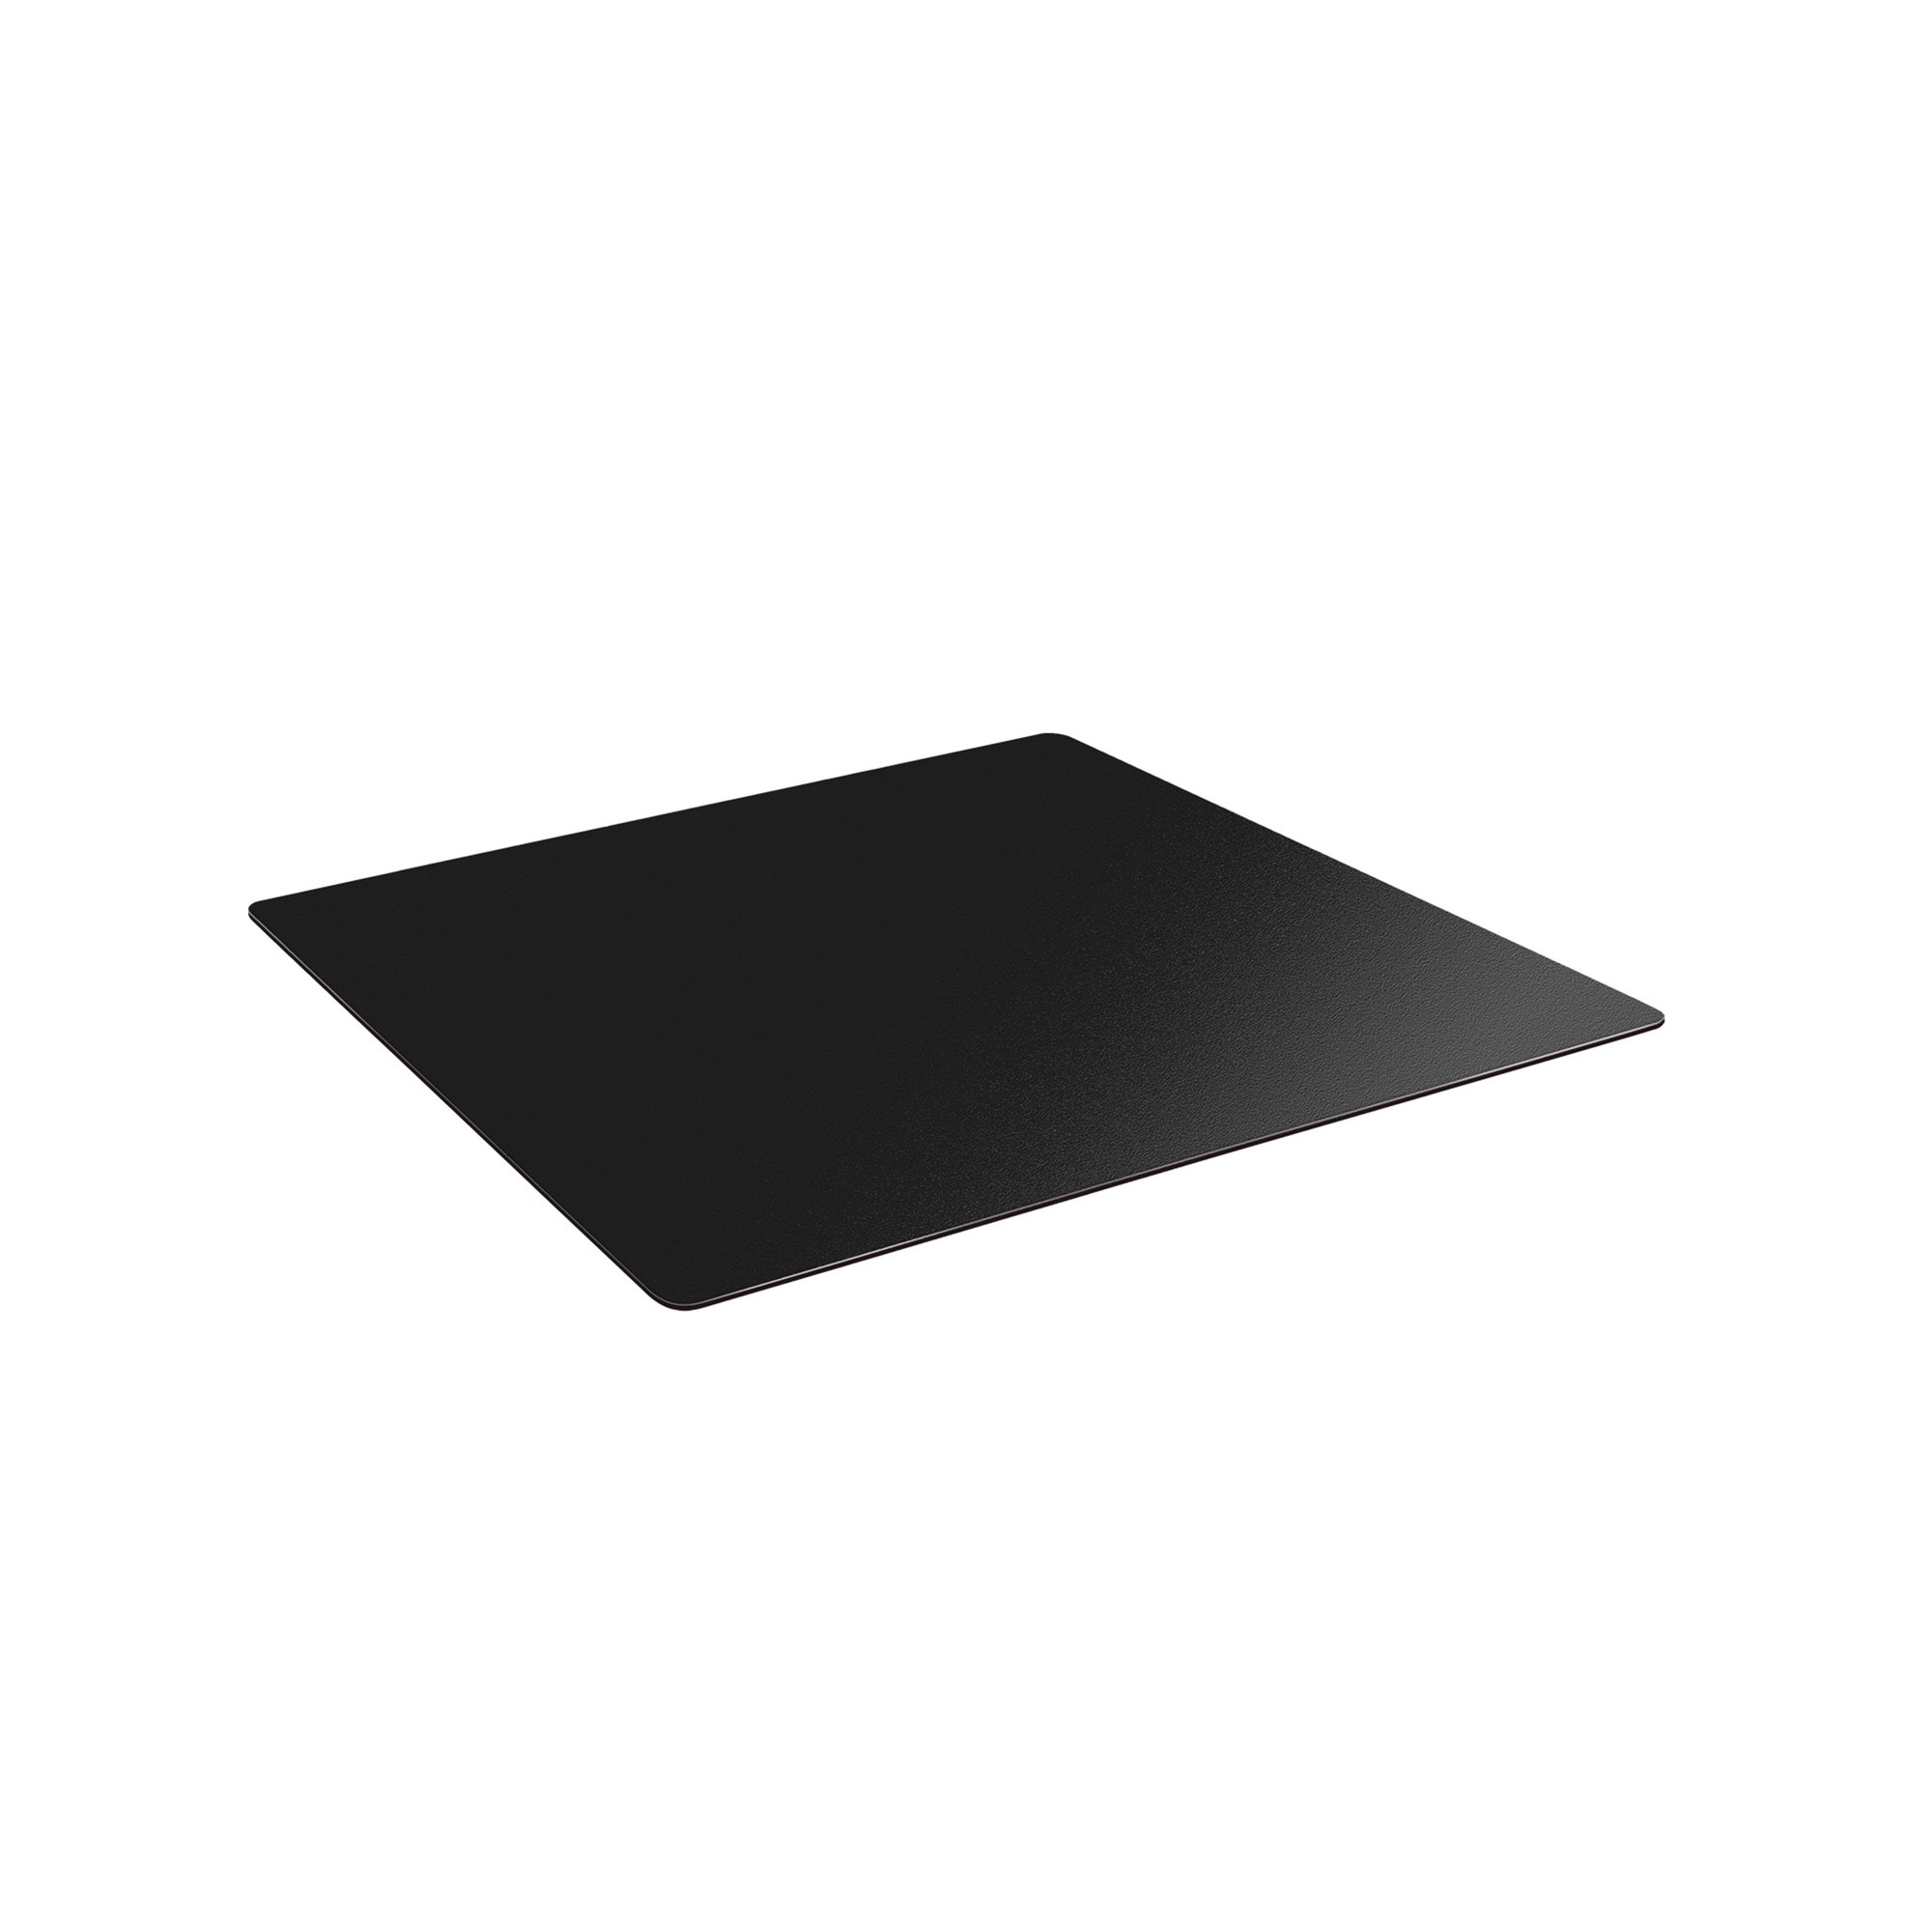 Aleco ES Robbins, Black Chair Mat for Hard Floors 36Inchx48Inch, Length 48 in, Width 36 in, Material Vinyl, Model 132013